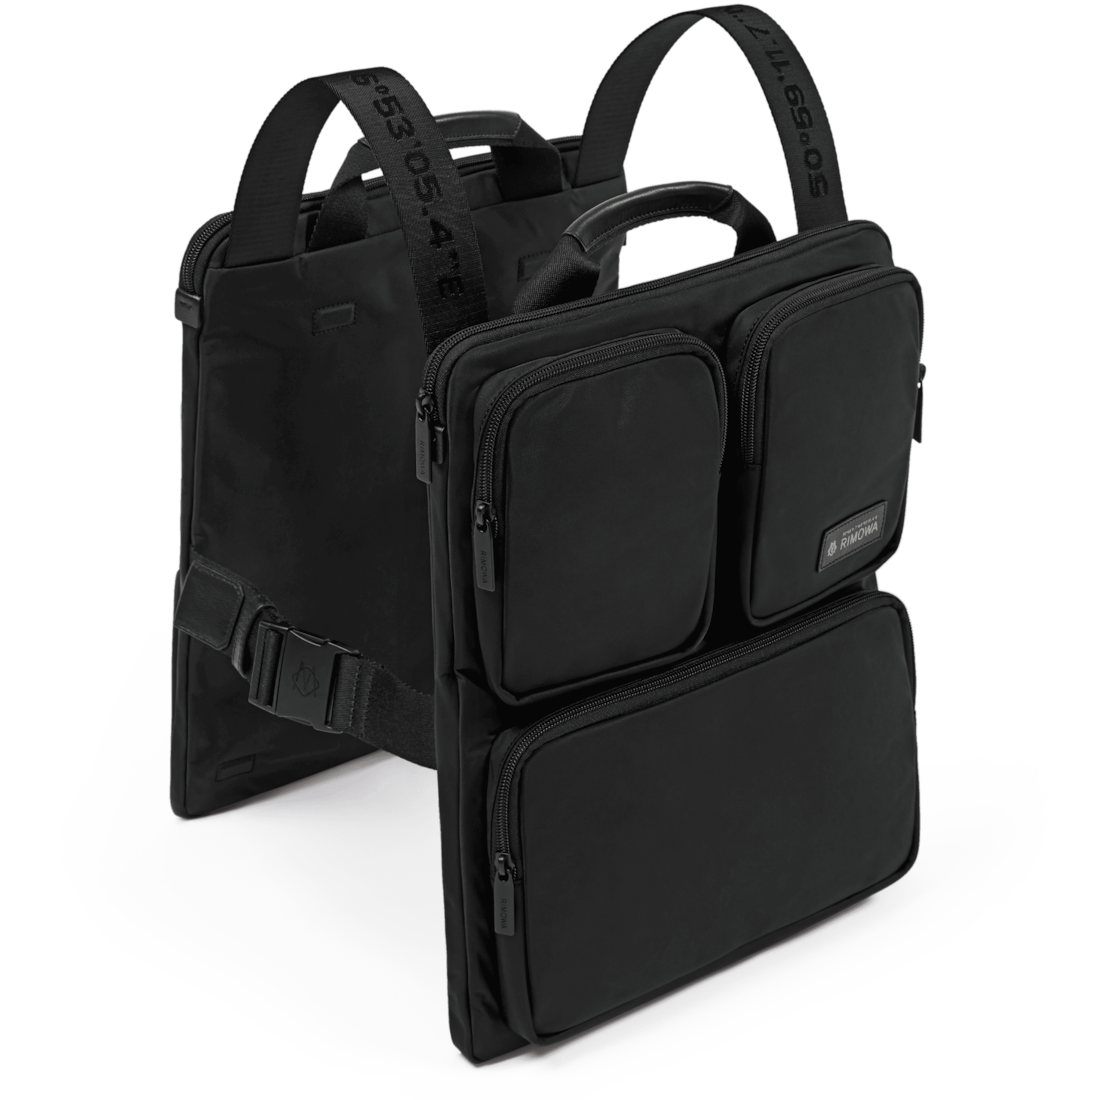 Oppressor Distract Dial Cabin Luggage Harness in black | Travel accessories | RIMOWA